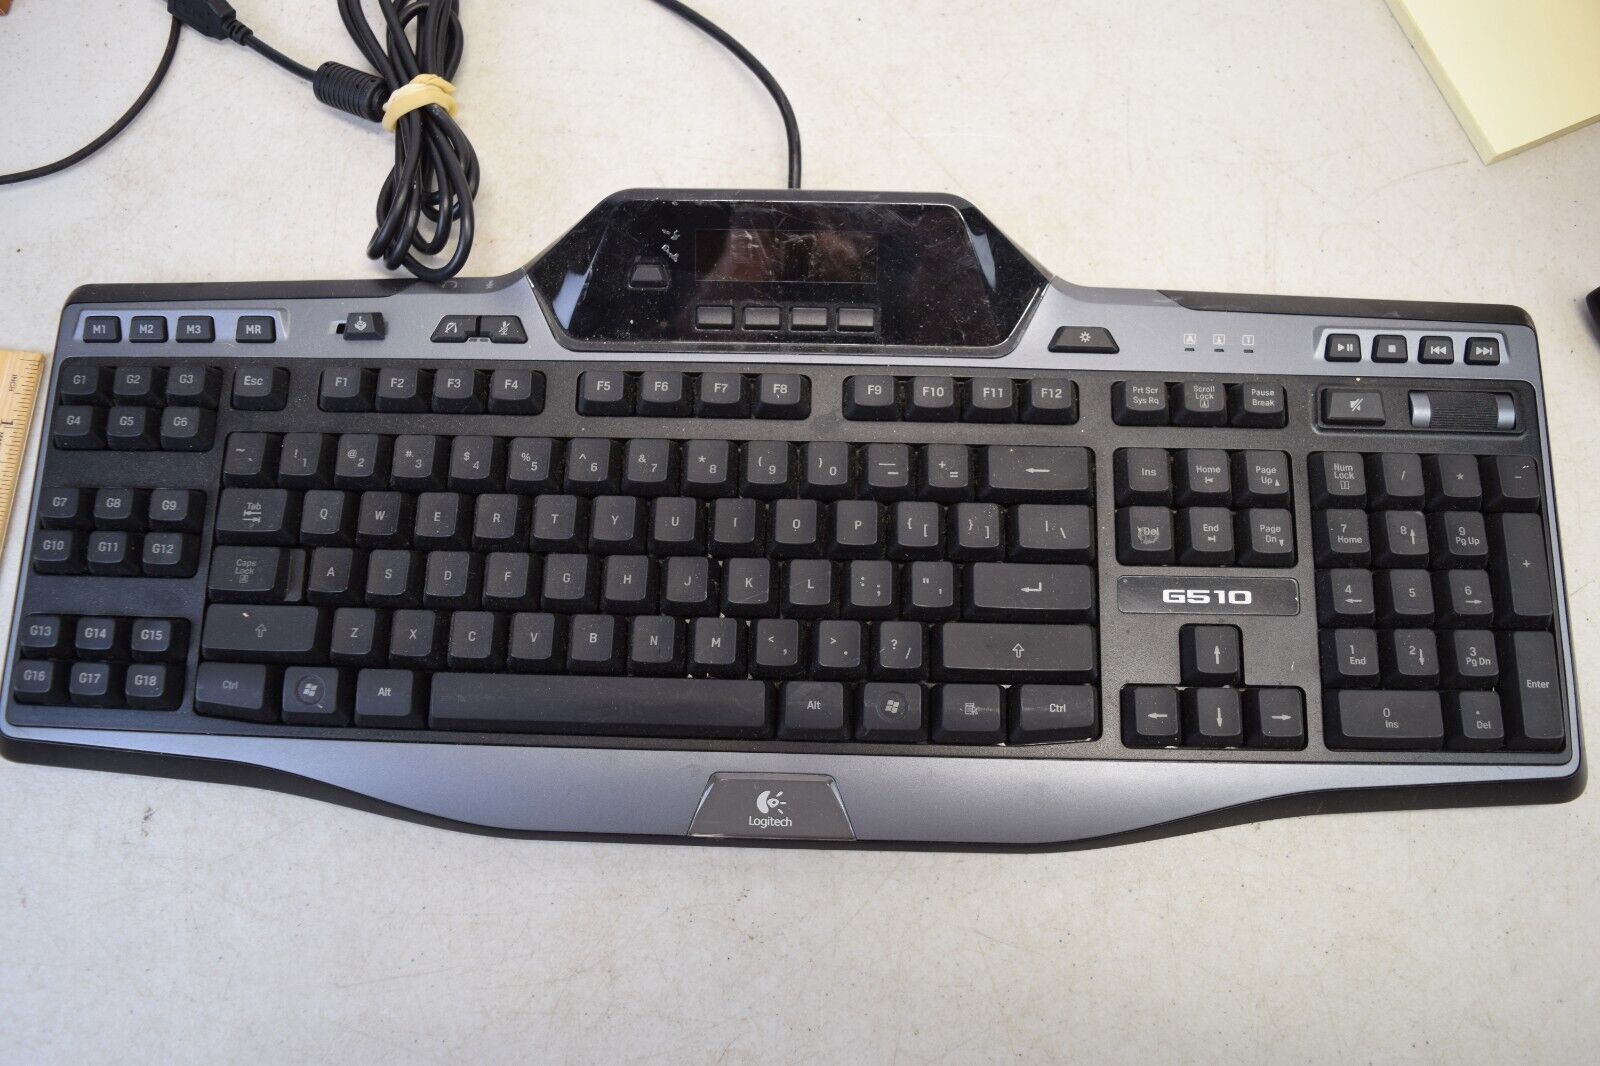 Logitech G510 Backlit Gaming Keyboard LCD Screen Model Y-U0010 Tested works